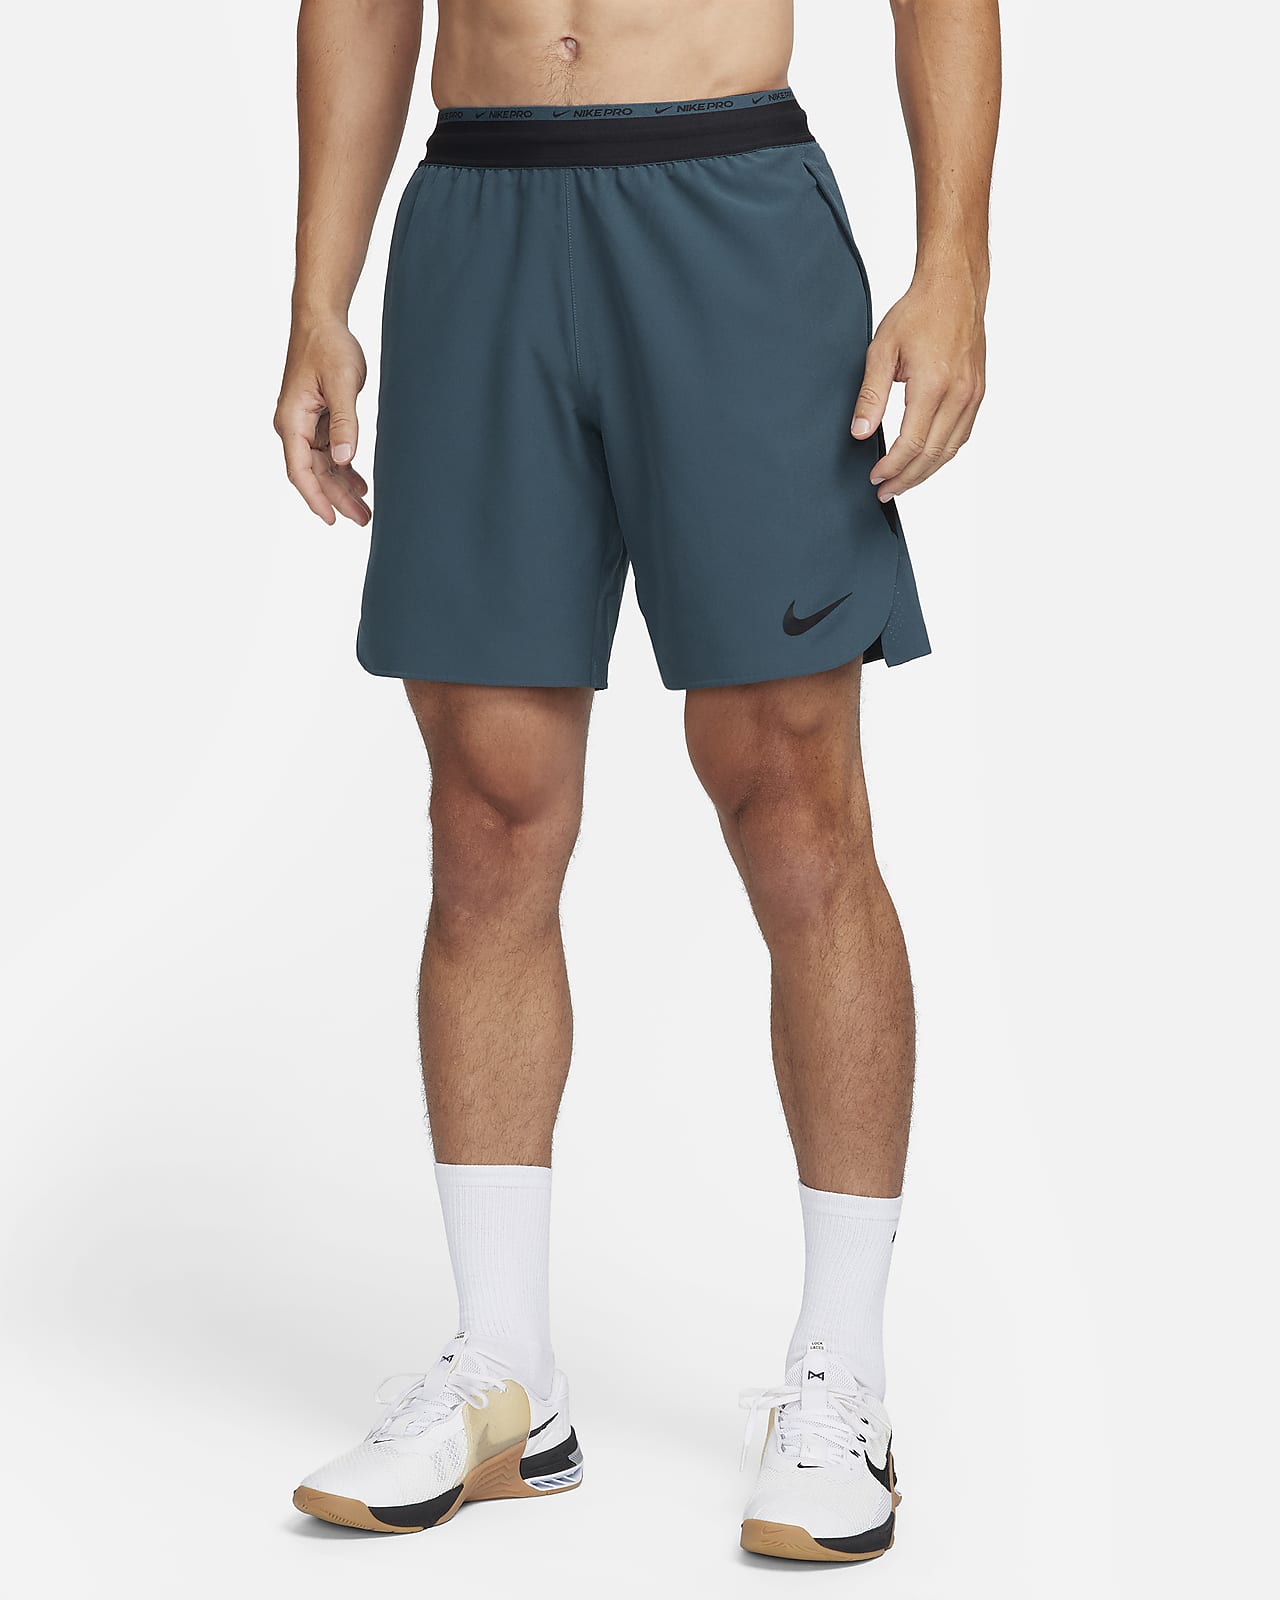 Nike Training Dri-FIT Flex Woven Heavy Weights shorts in black